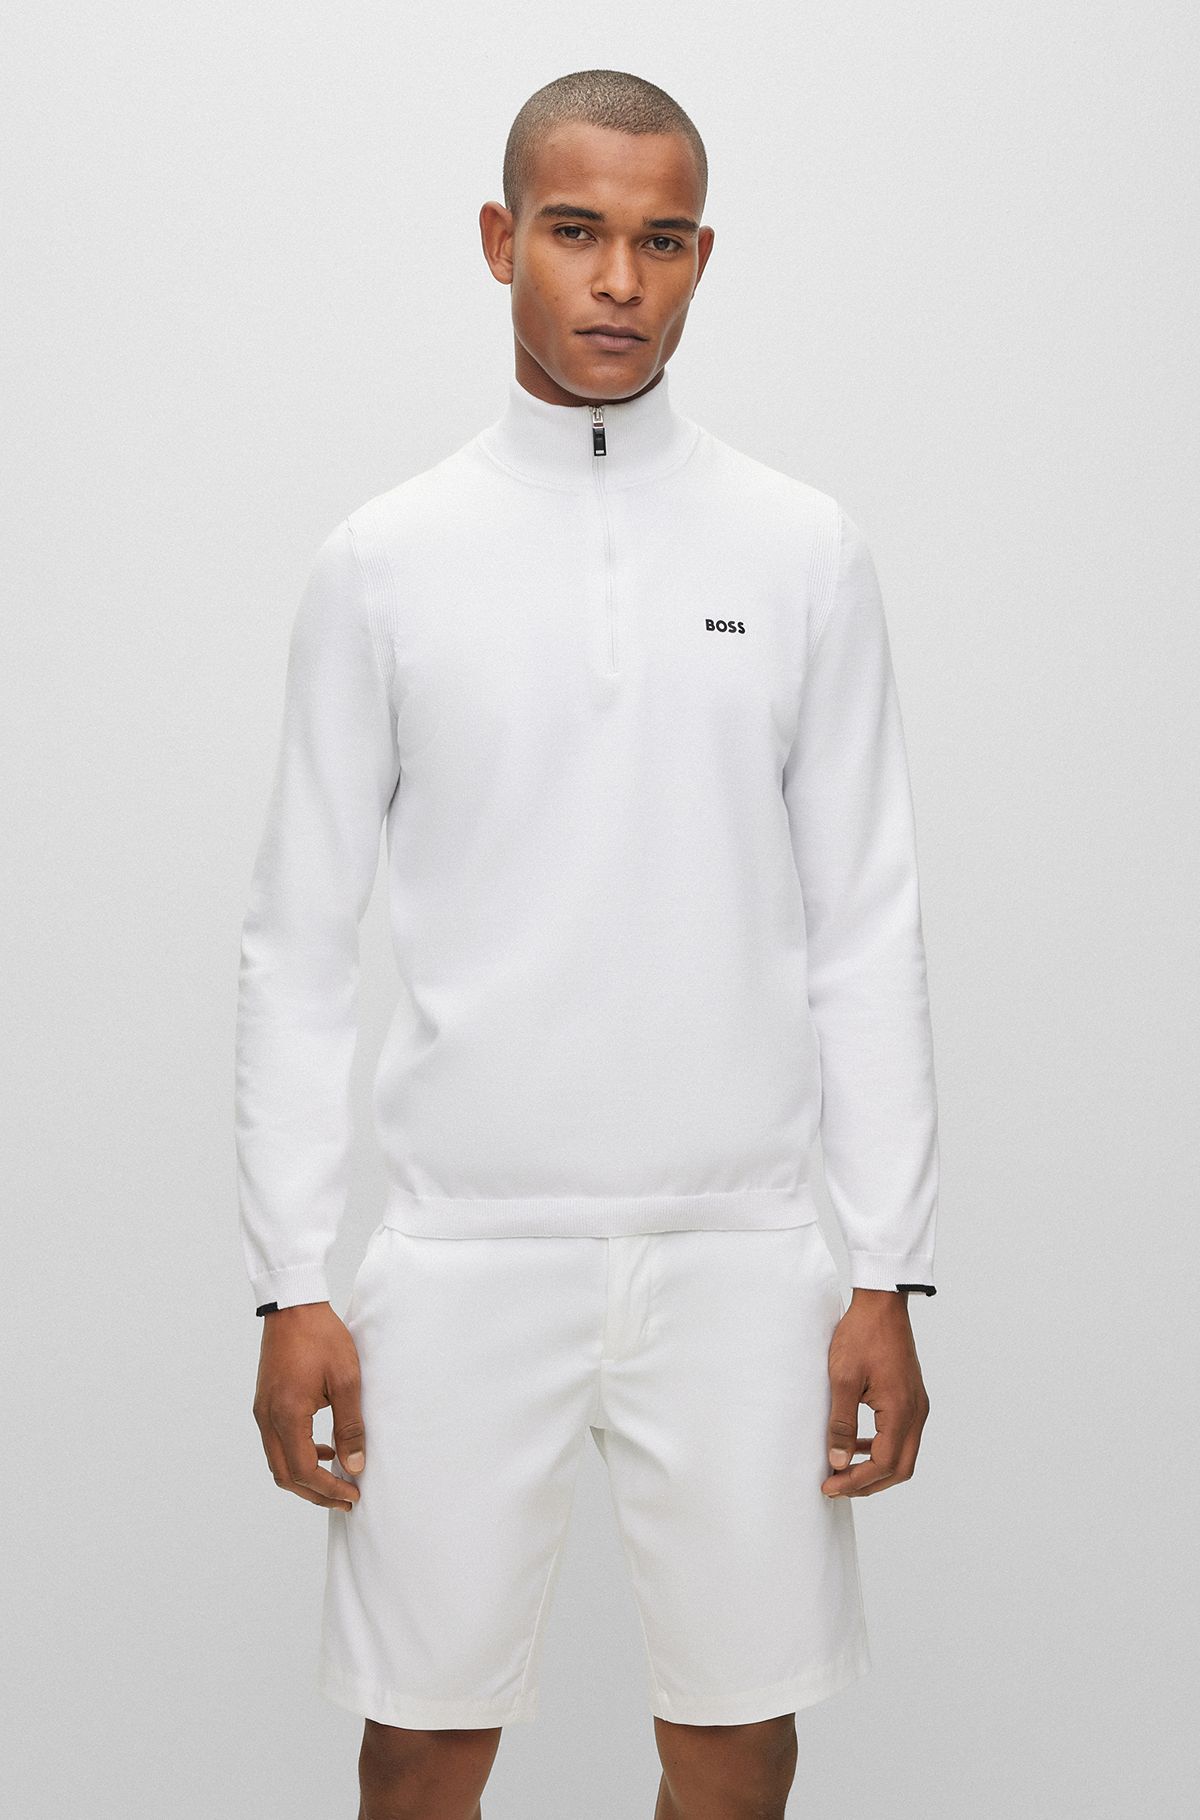 Cotton-blend zip-neck sweater with logo print, White